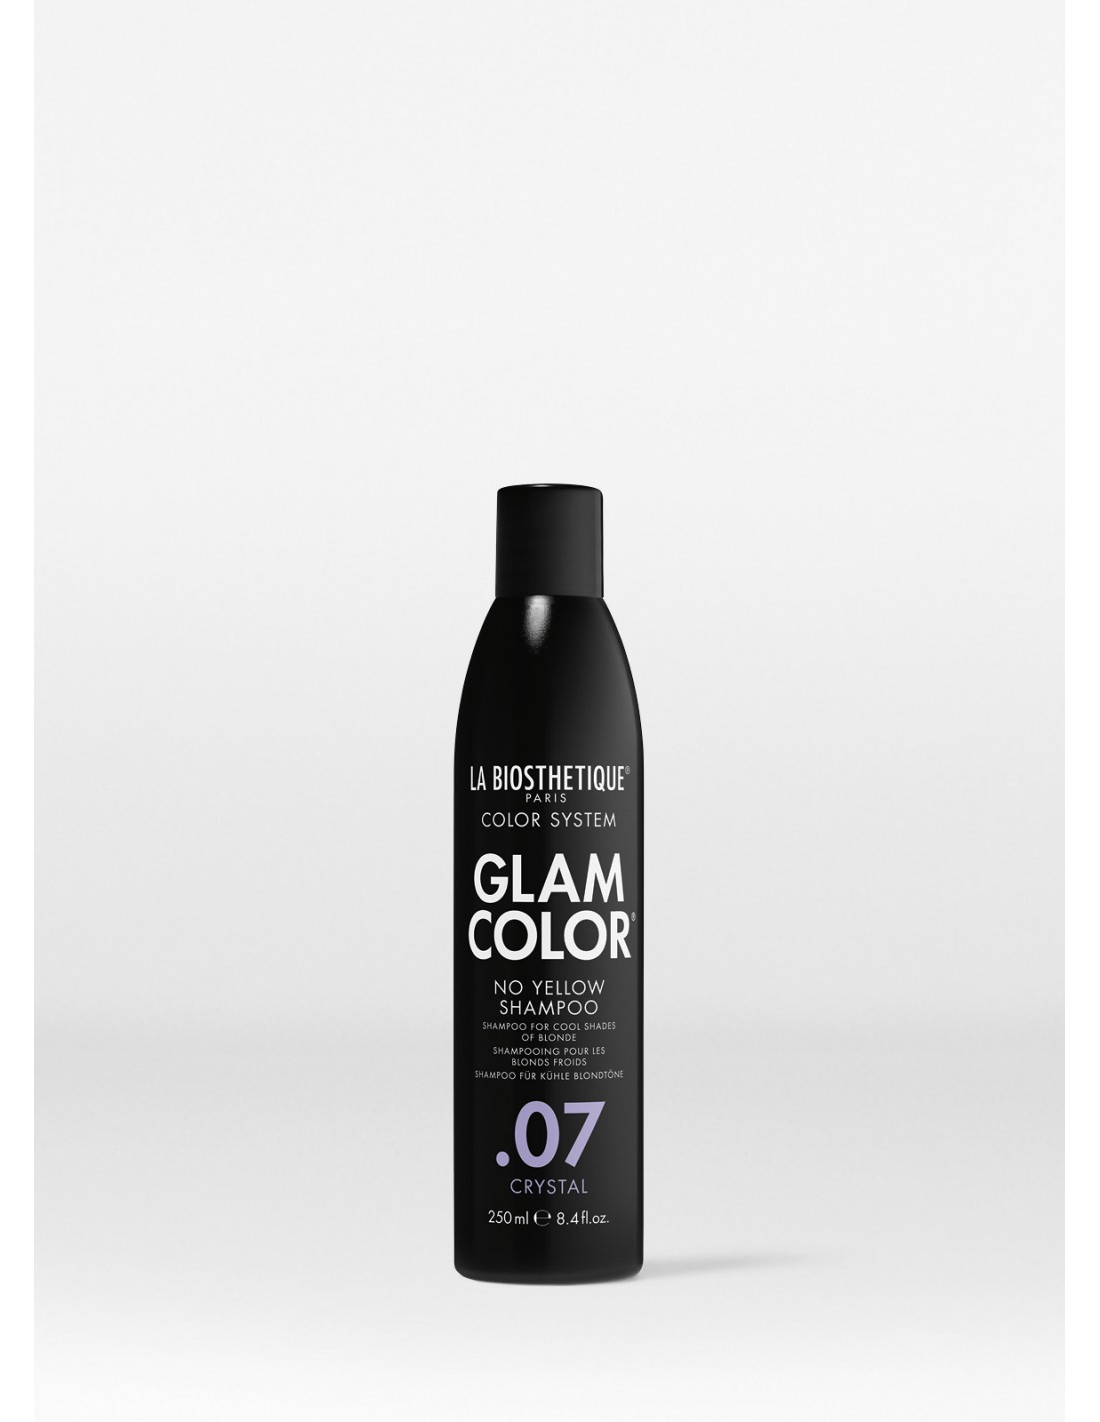 Glam Color No Yellow Shampoo .07 Crystal 250 ml